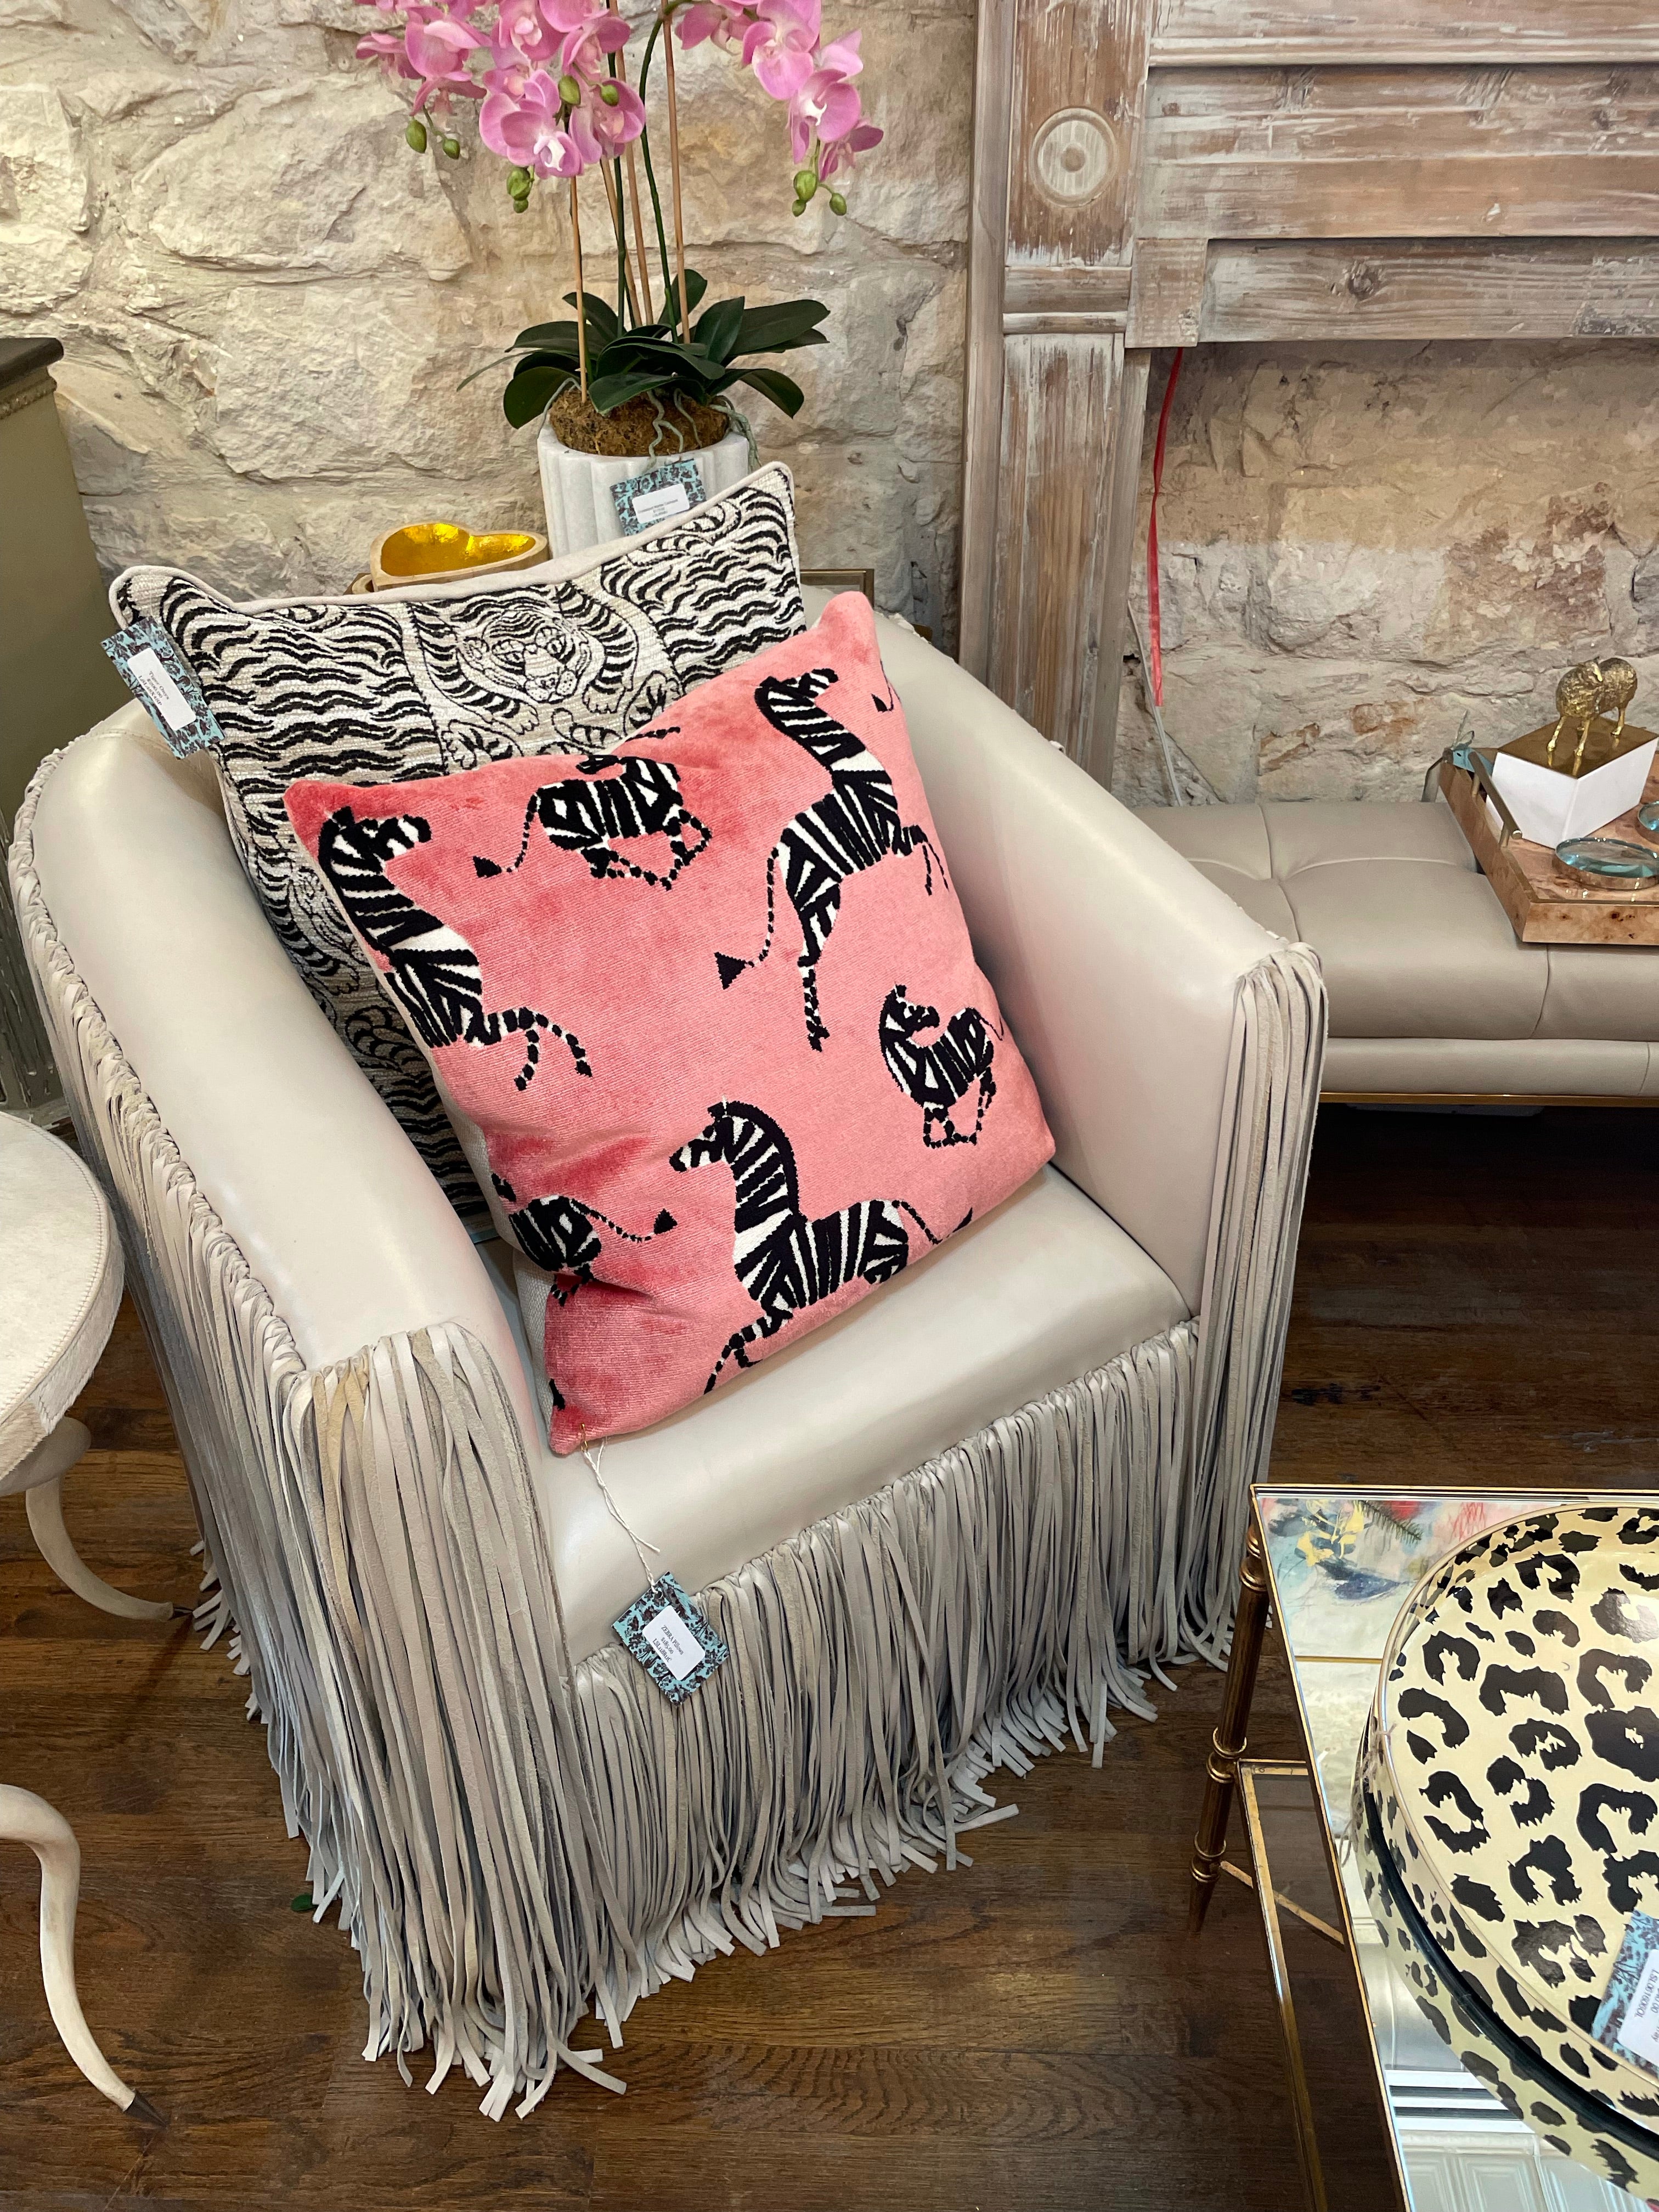 Zebra Purse with Flower, Zebra Striped Pink Flower Rhinestone Fashion Purse  Handbag & Wallet